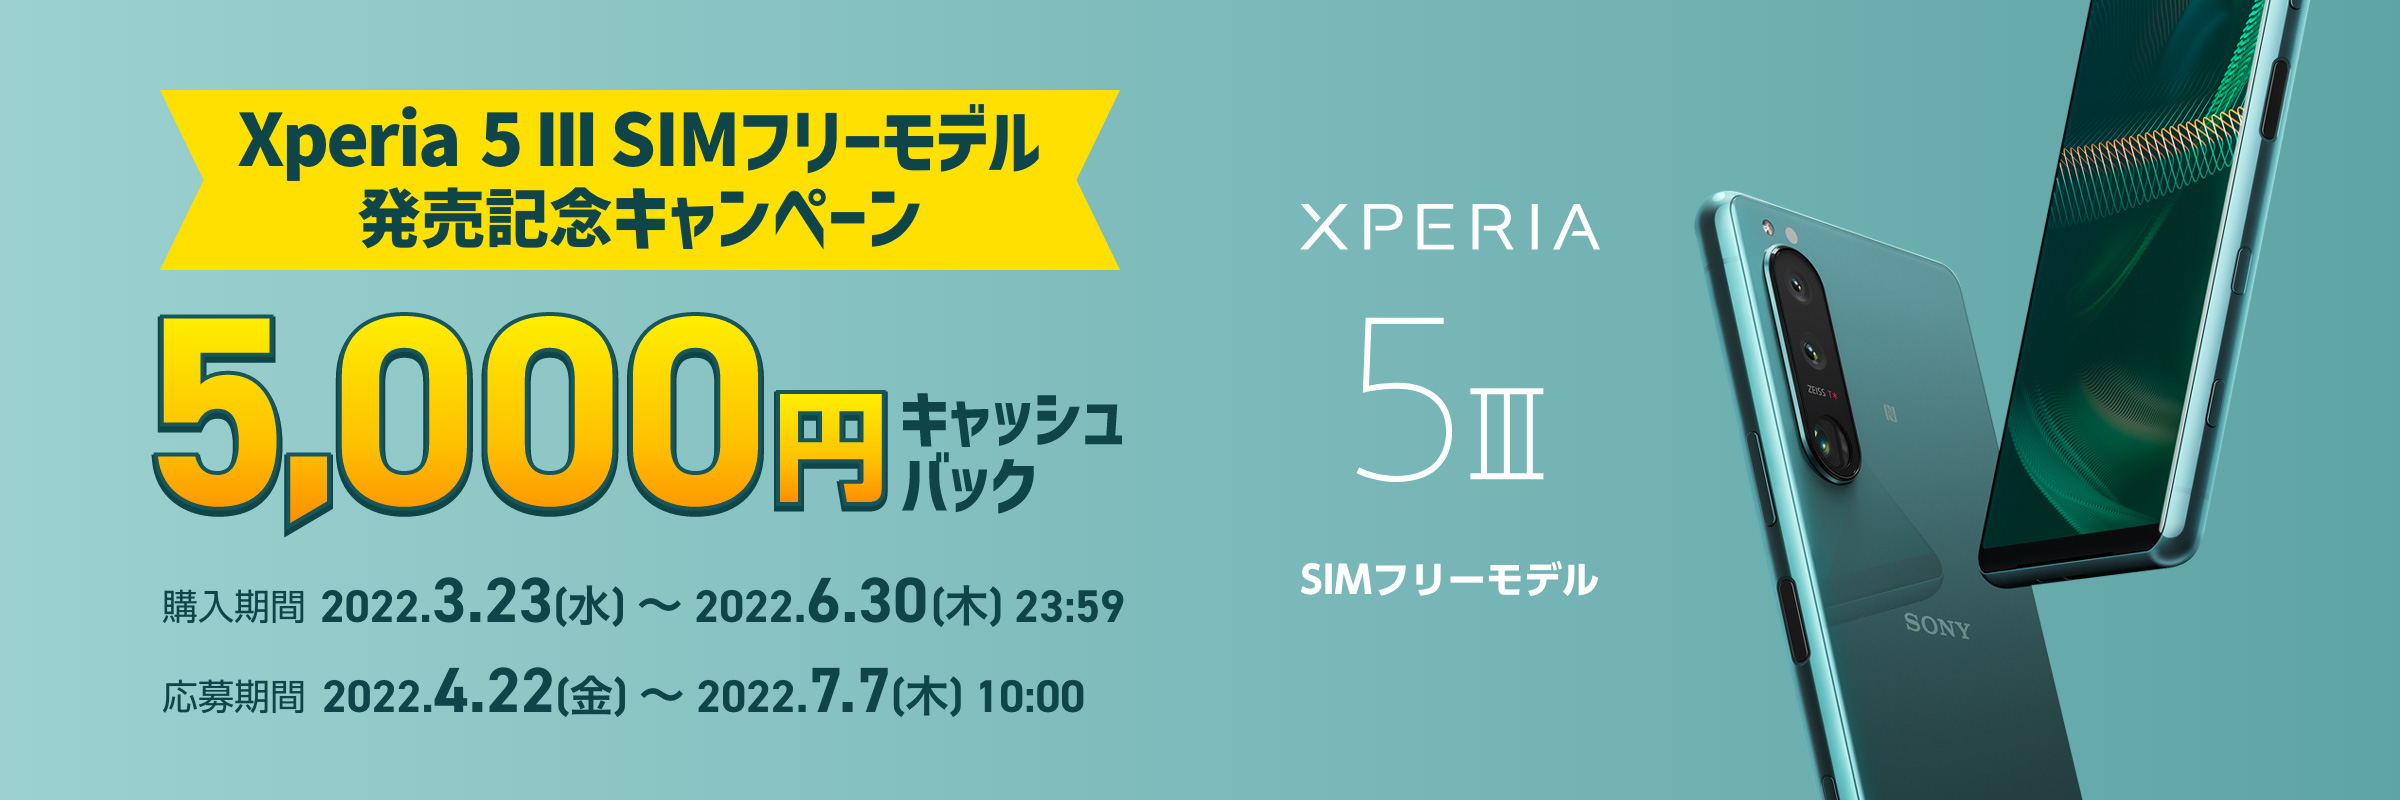 Xperia 5 III SIMフリーモデル発売記念キャンペーン 5,000円キャッシュバック 購入期間：2022.3.23(水) ～ 2022.6.30(木)23:59 応募期間：2022.4.22(金) ～ 2022.7.7(木)10:00